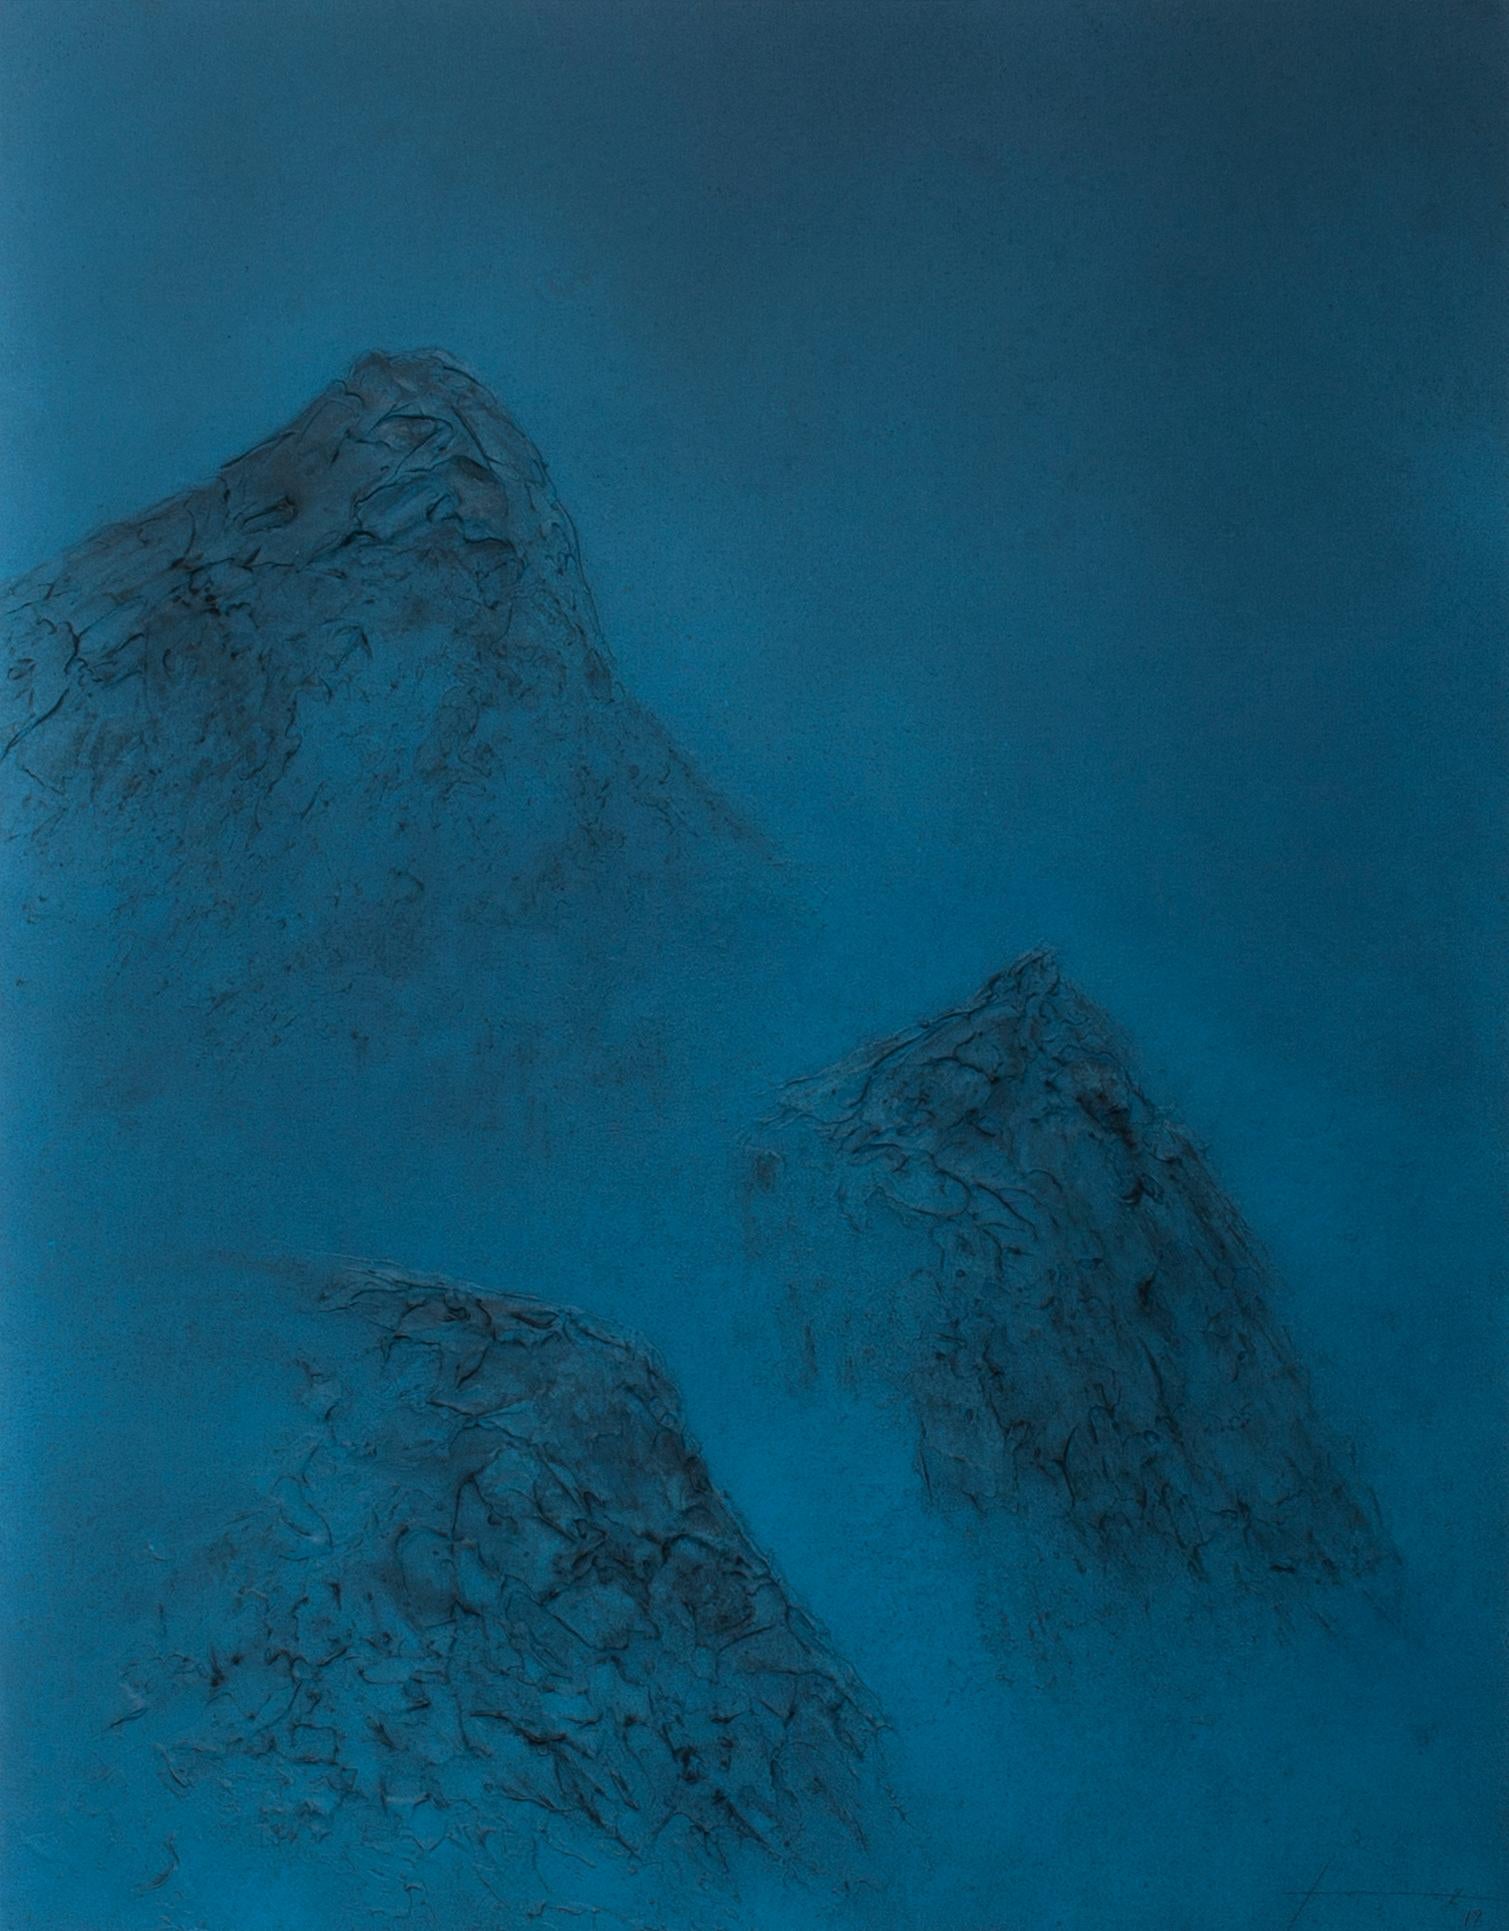 Black Mountains XX - 21st Century, Contemporary Art, Landscape Painting